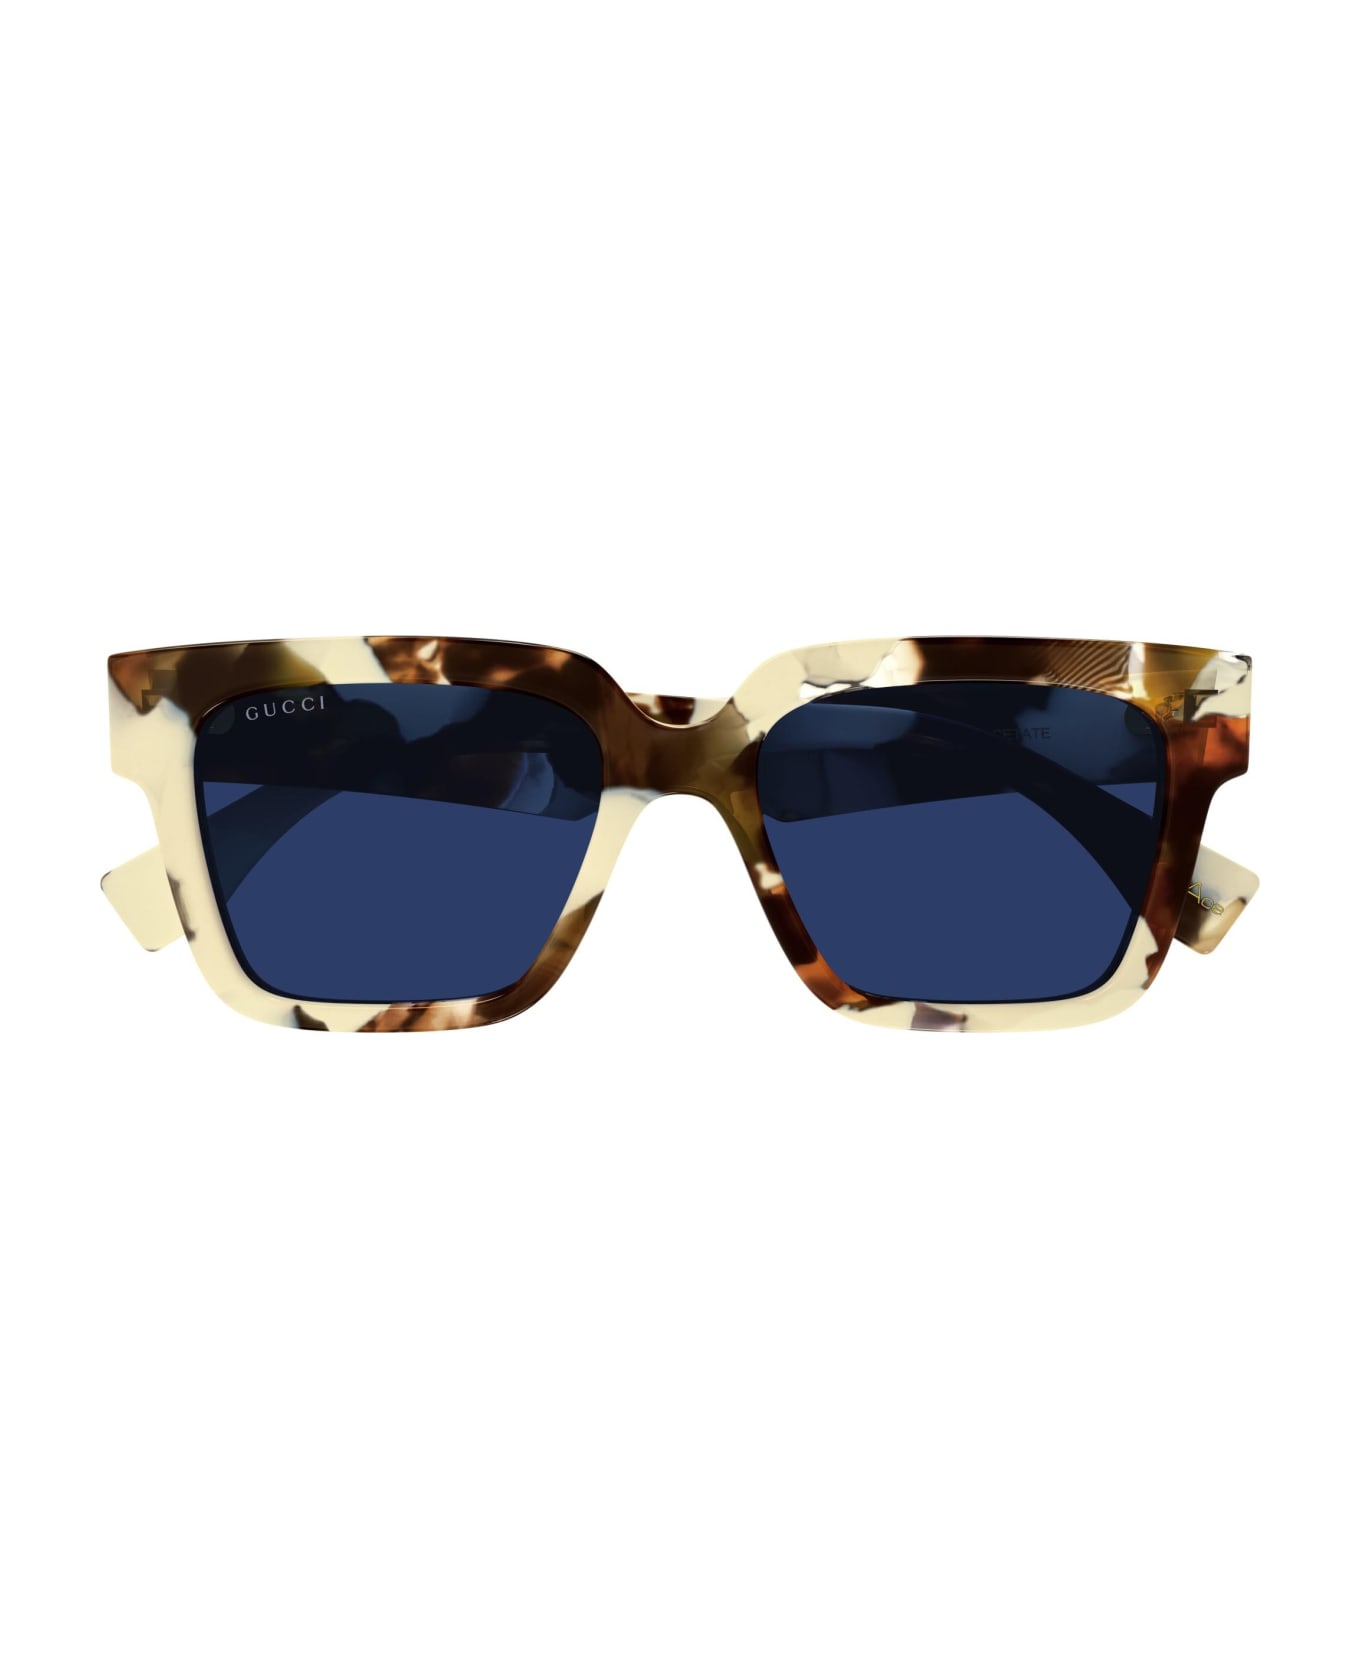 Gucci Eyewear Sunglasses - Havana chiaro/Blu サングラス